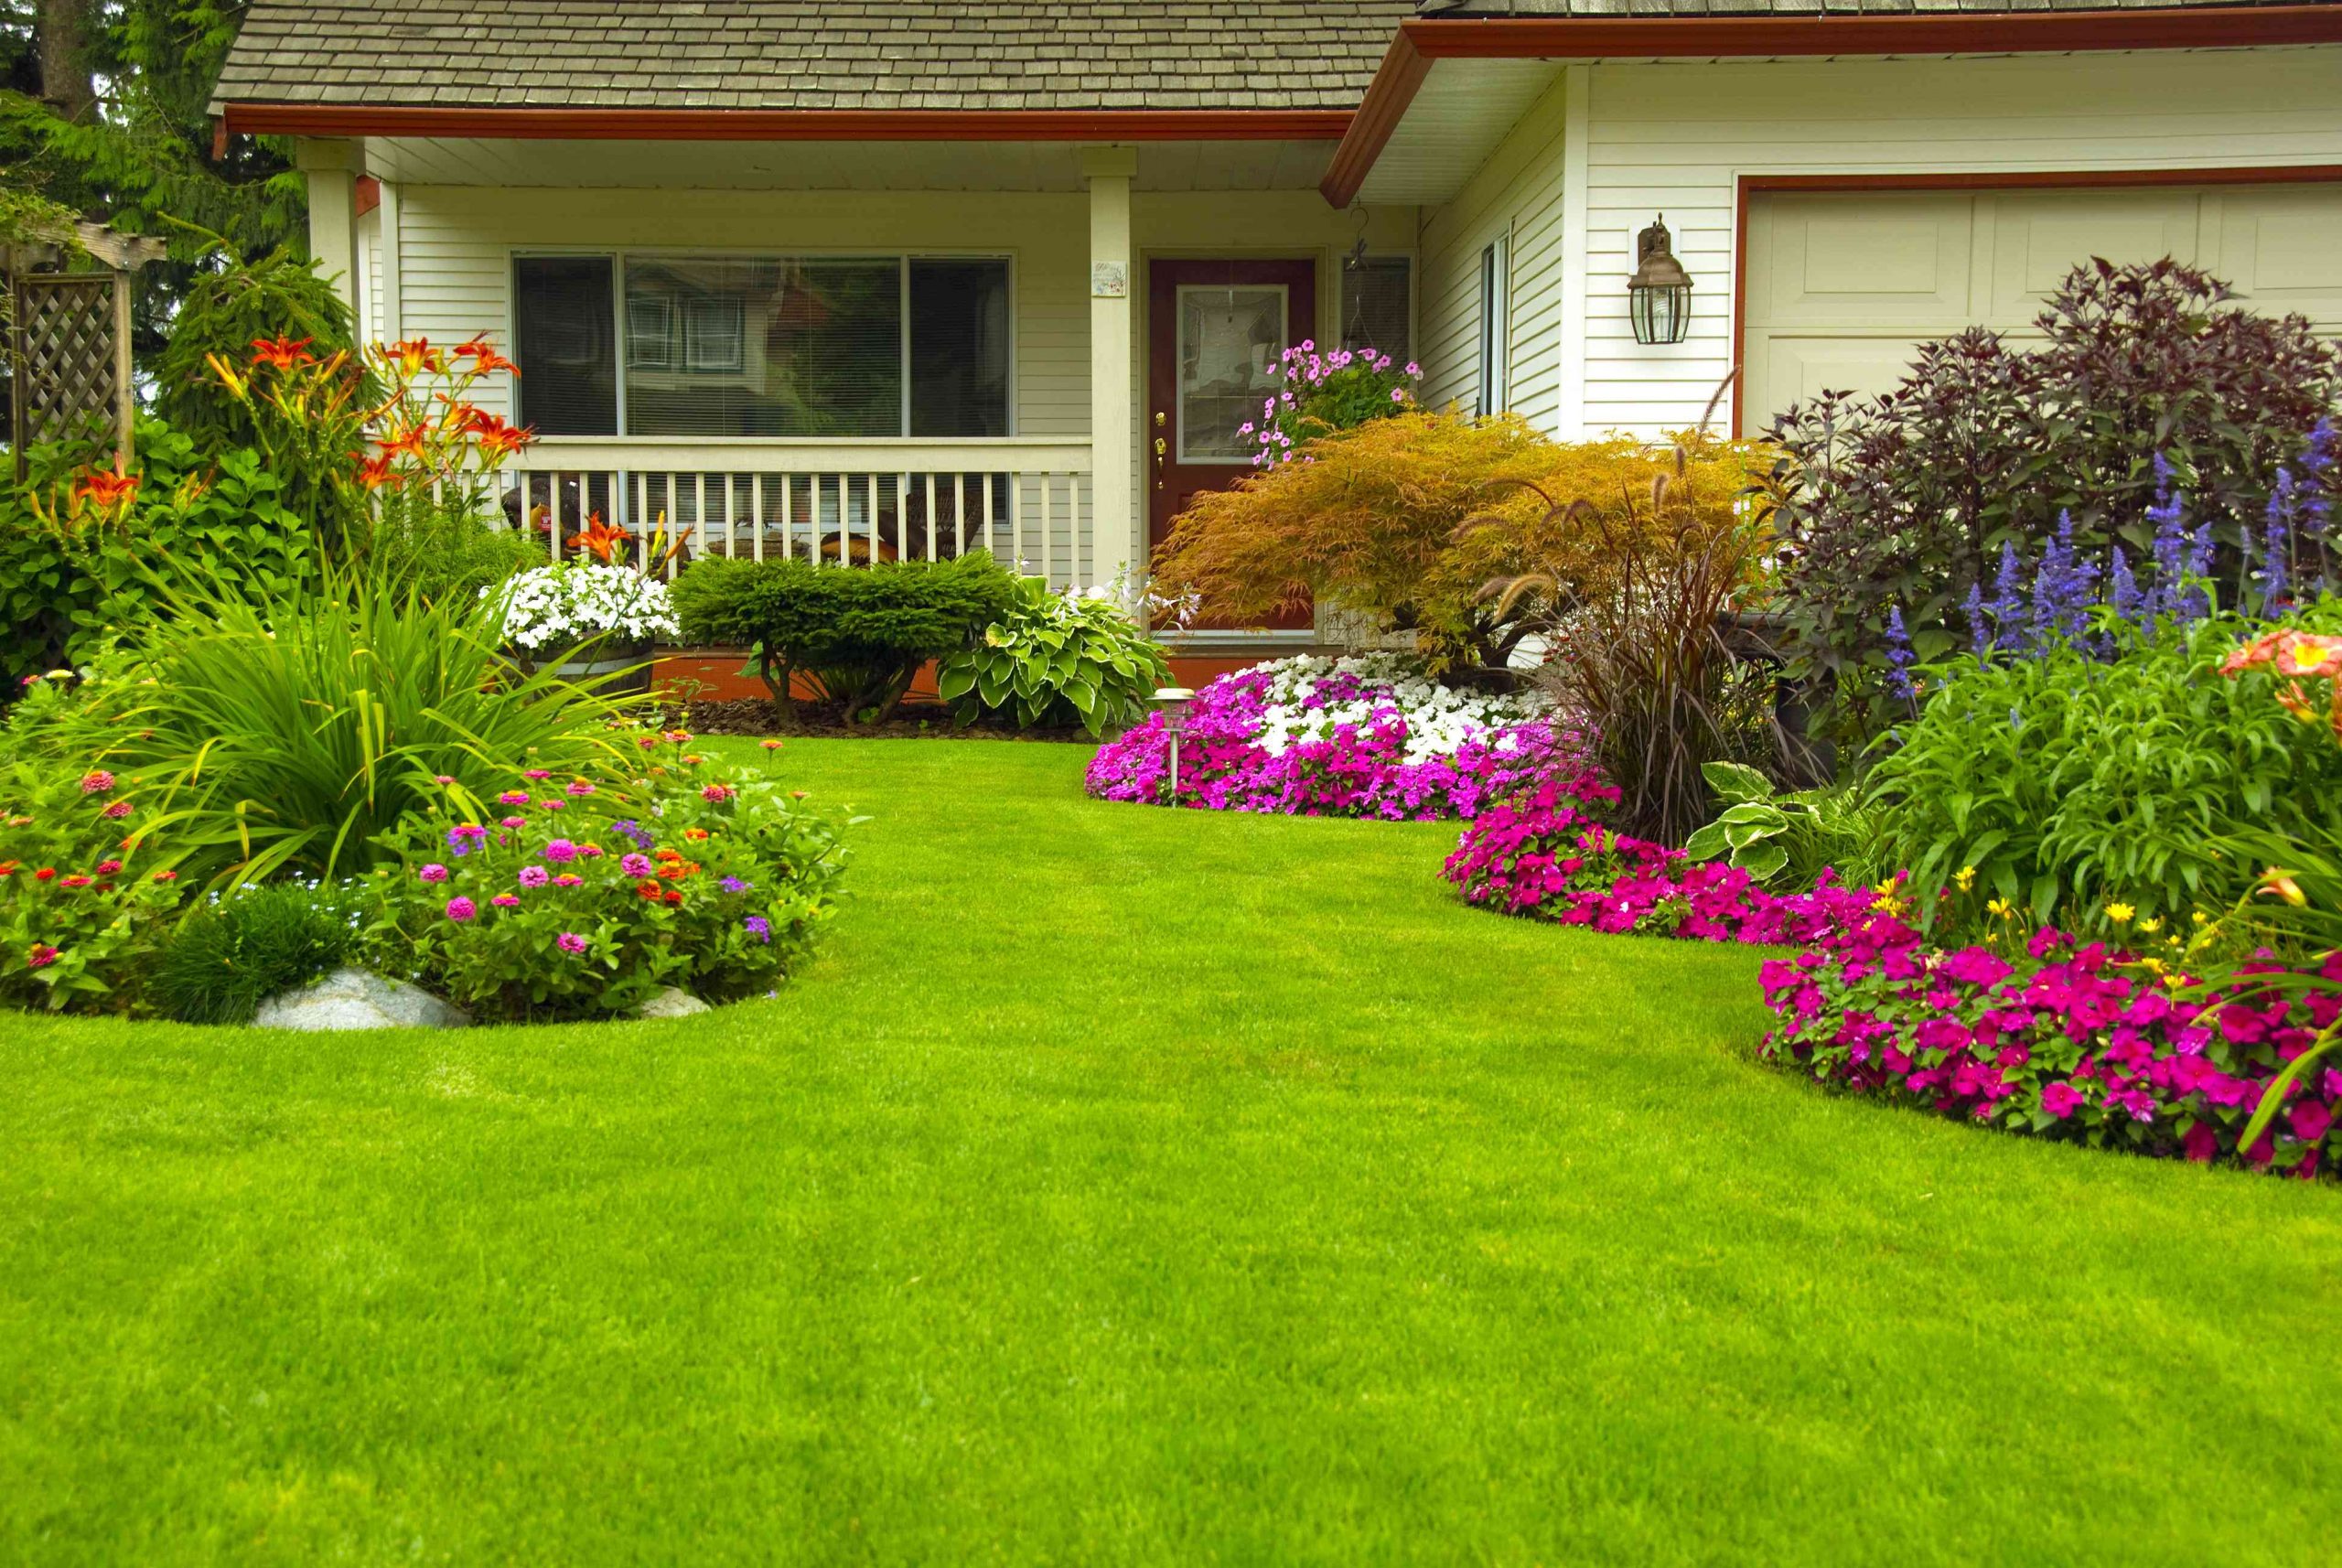 How do you build a front yard garden?